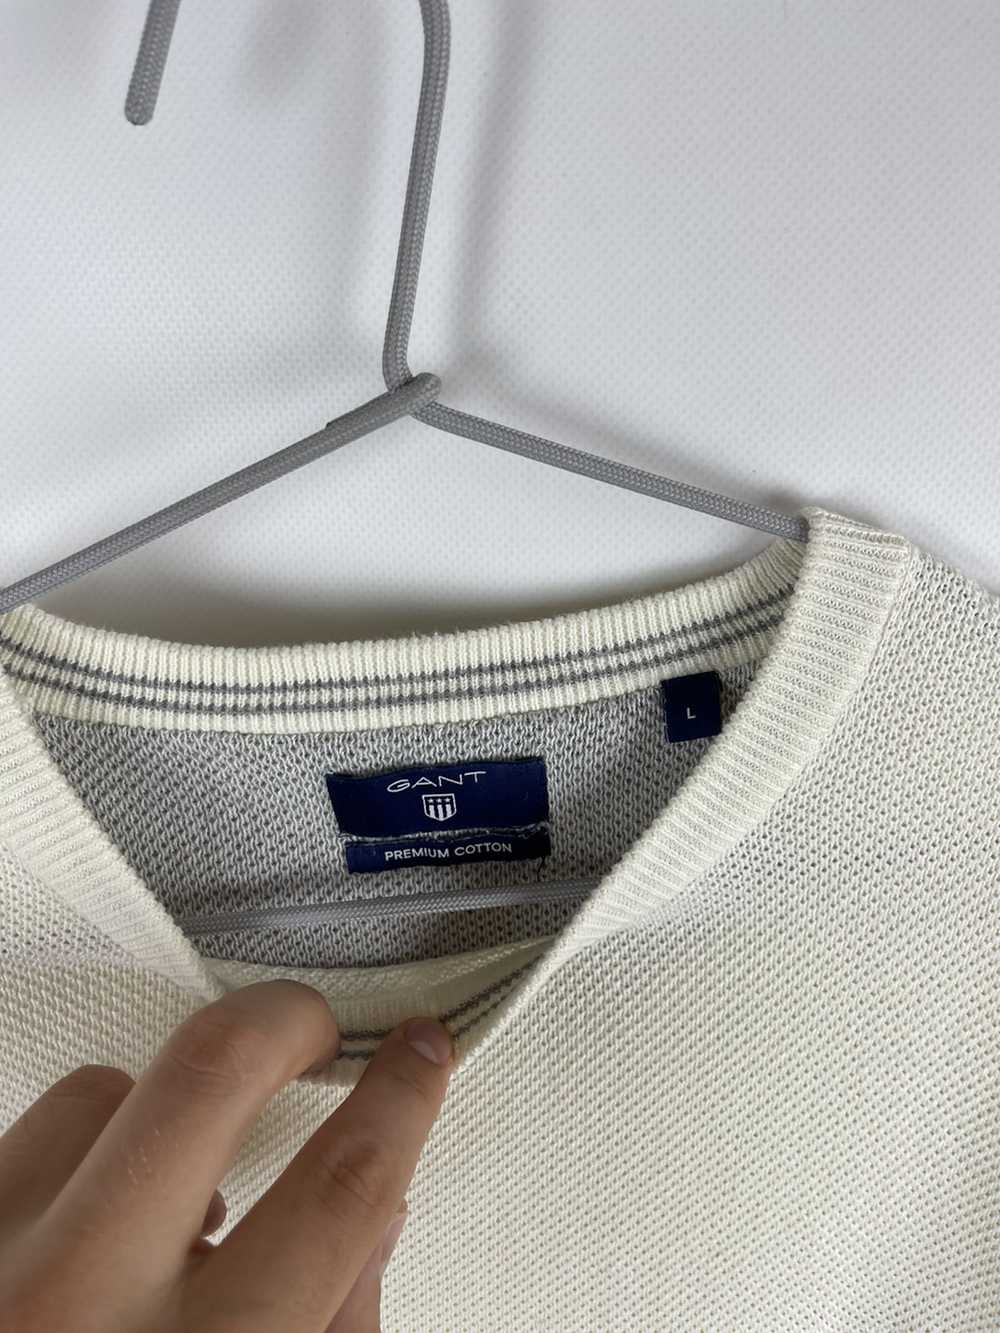 Gant Gant Premium Cotton knitted light sweater - image 7